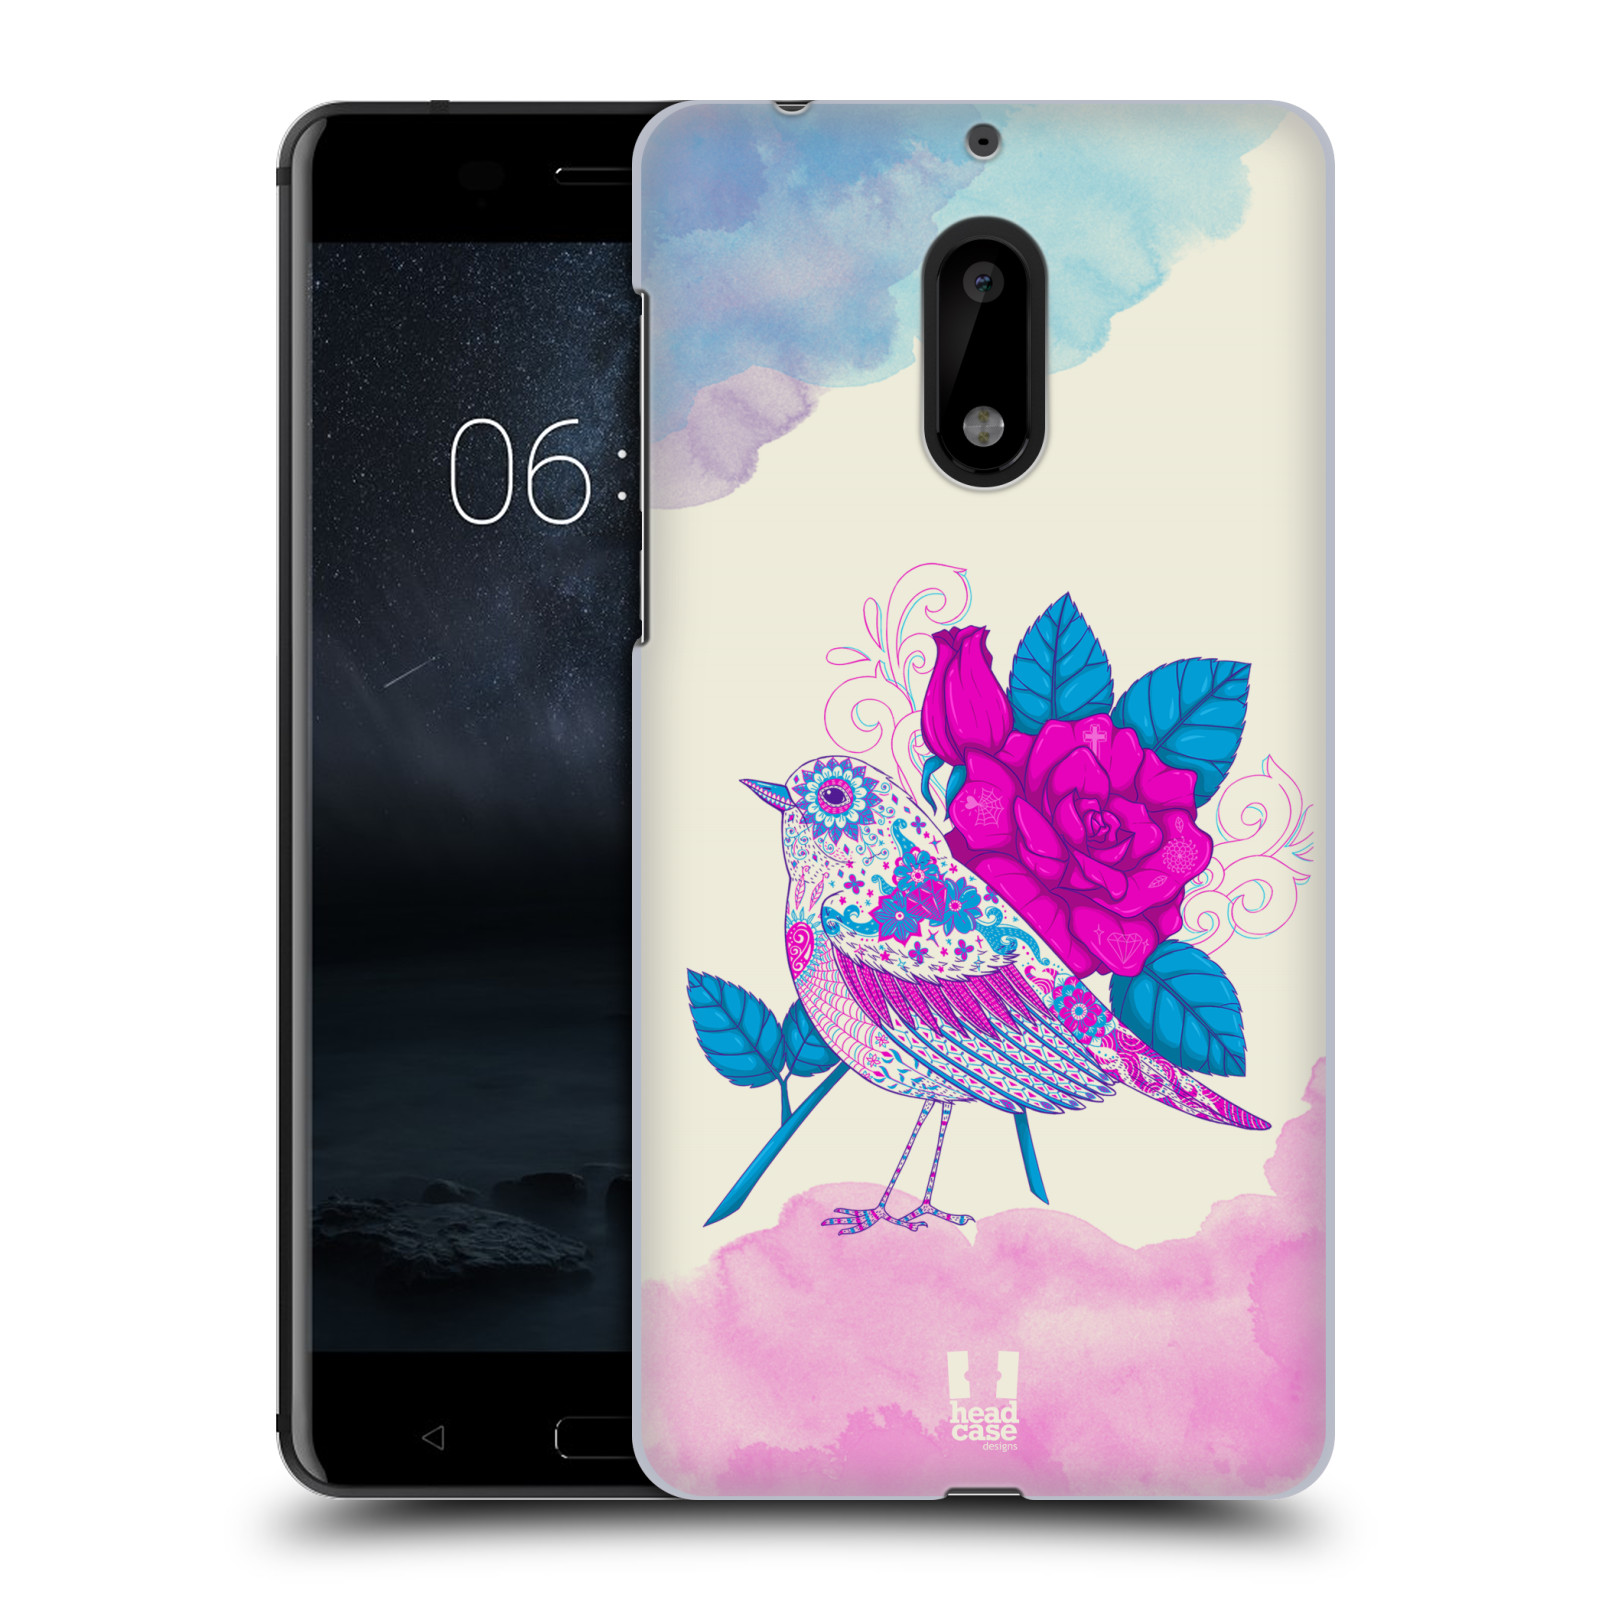 HEAD CASE plastový obal na mobil Nokia 6 vzor Květina ptáčci FIALOVÁ